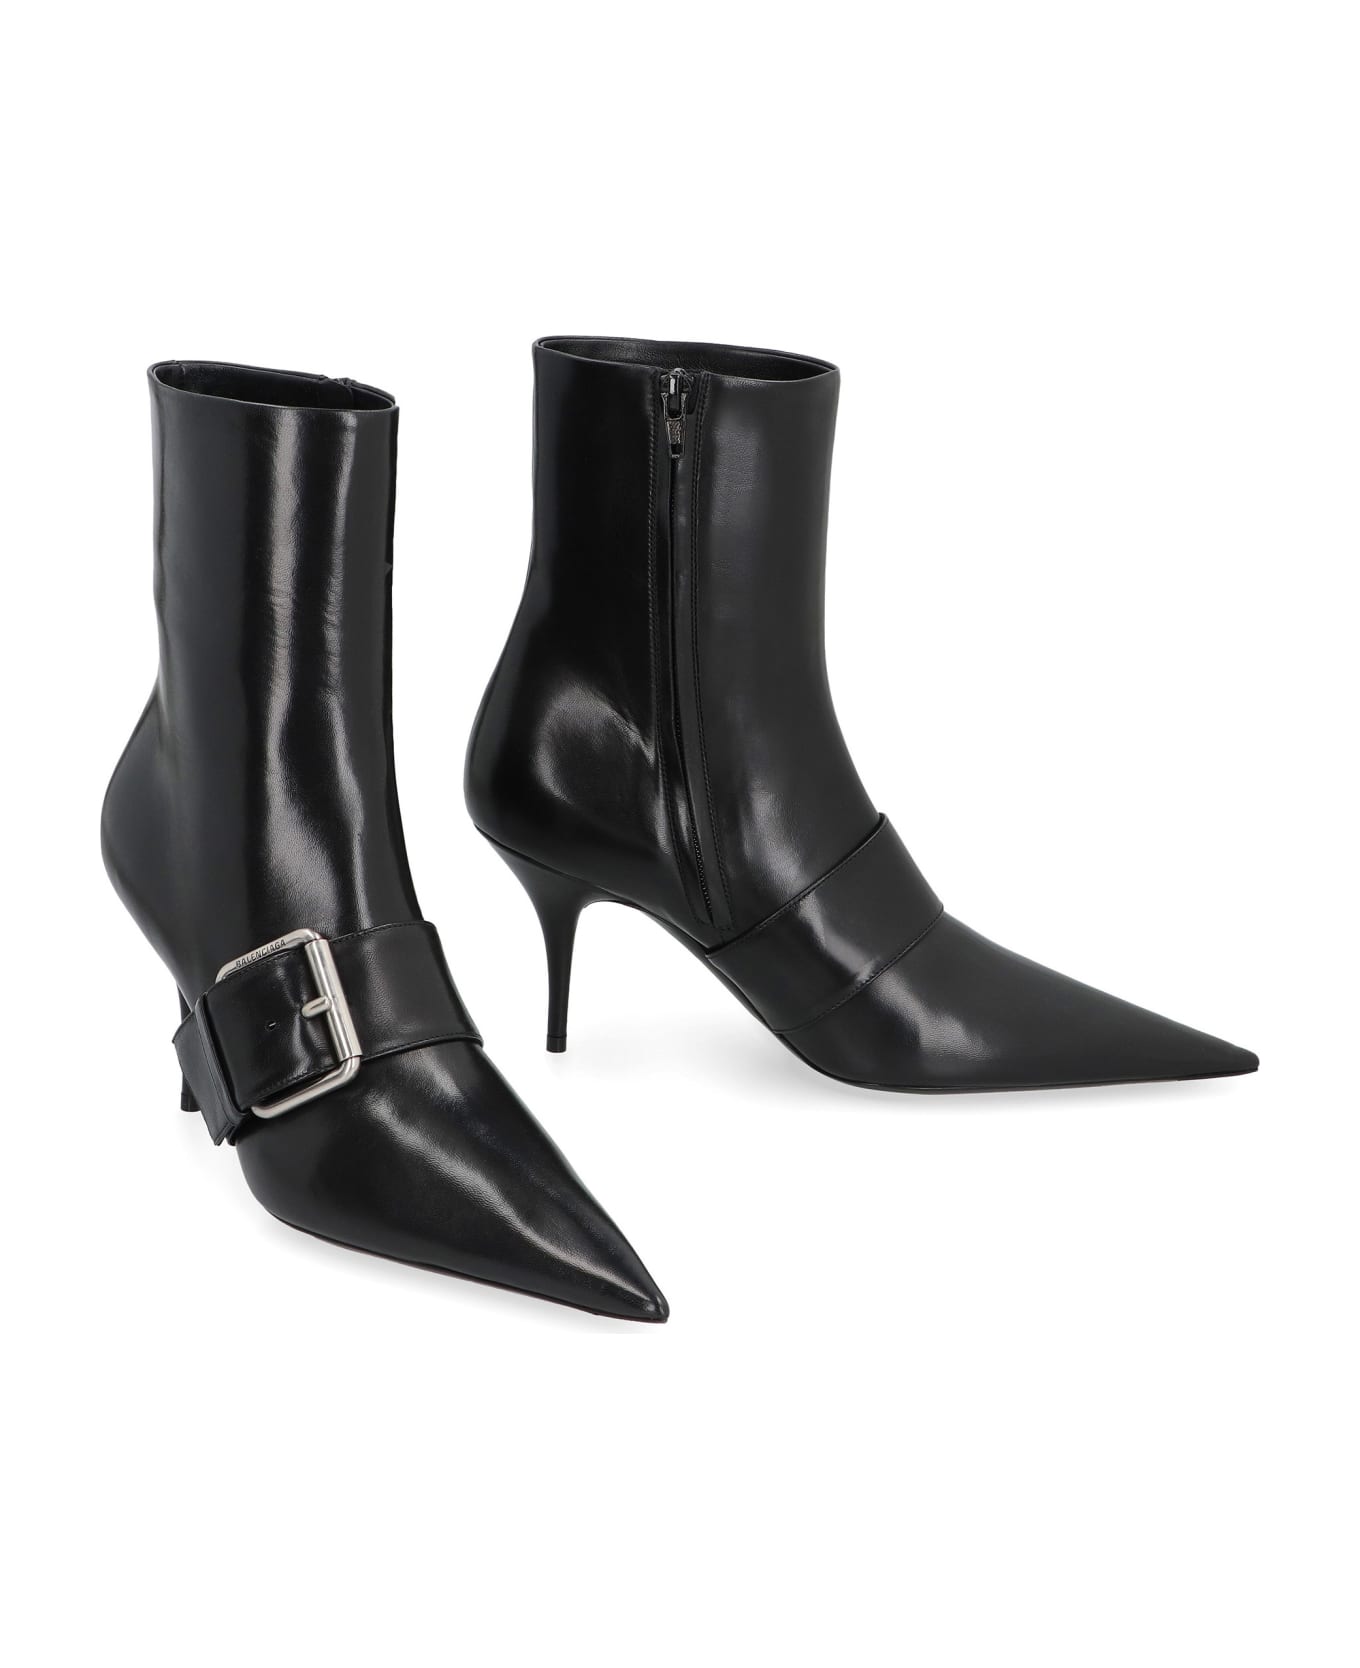 Balenciaga Knife 80 Leather Ankle Boots - black ブーツ